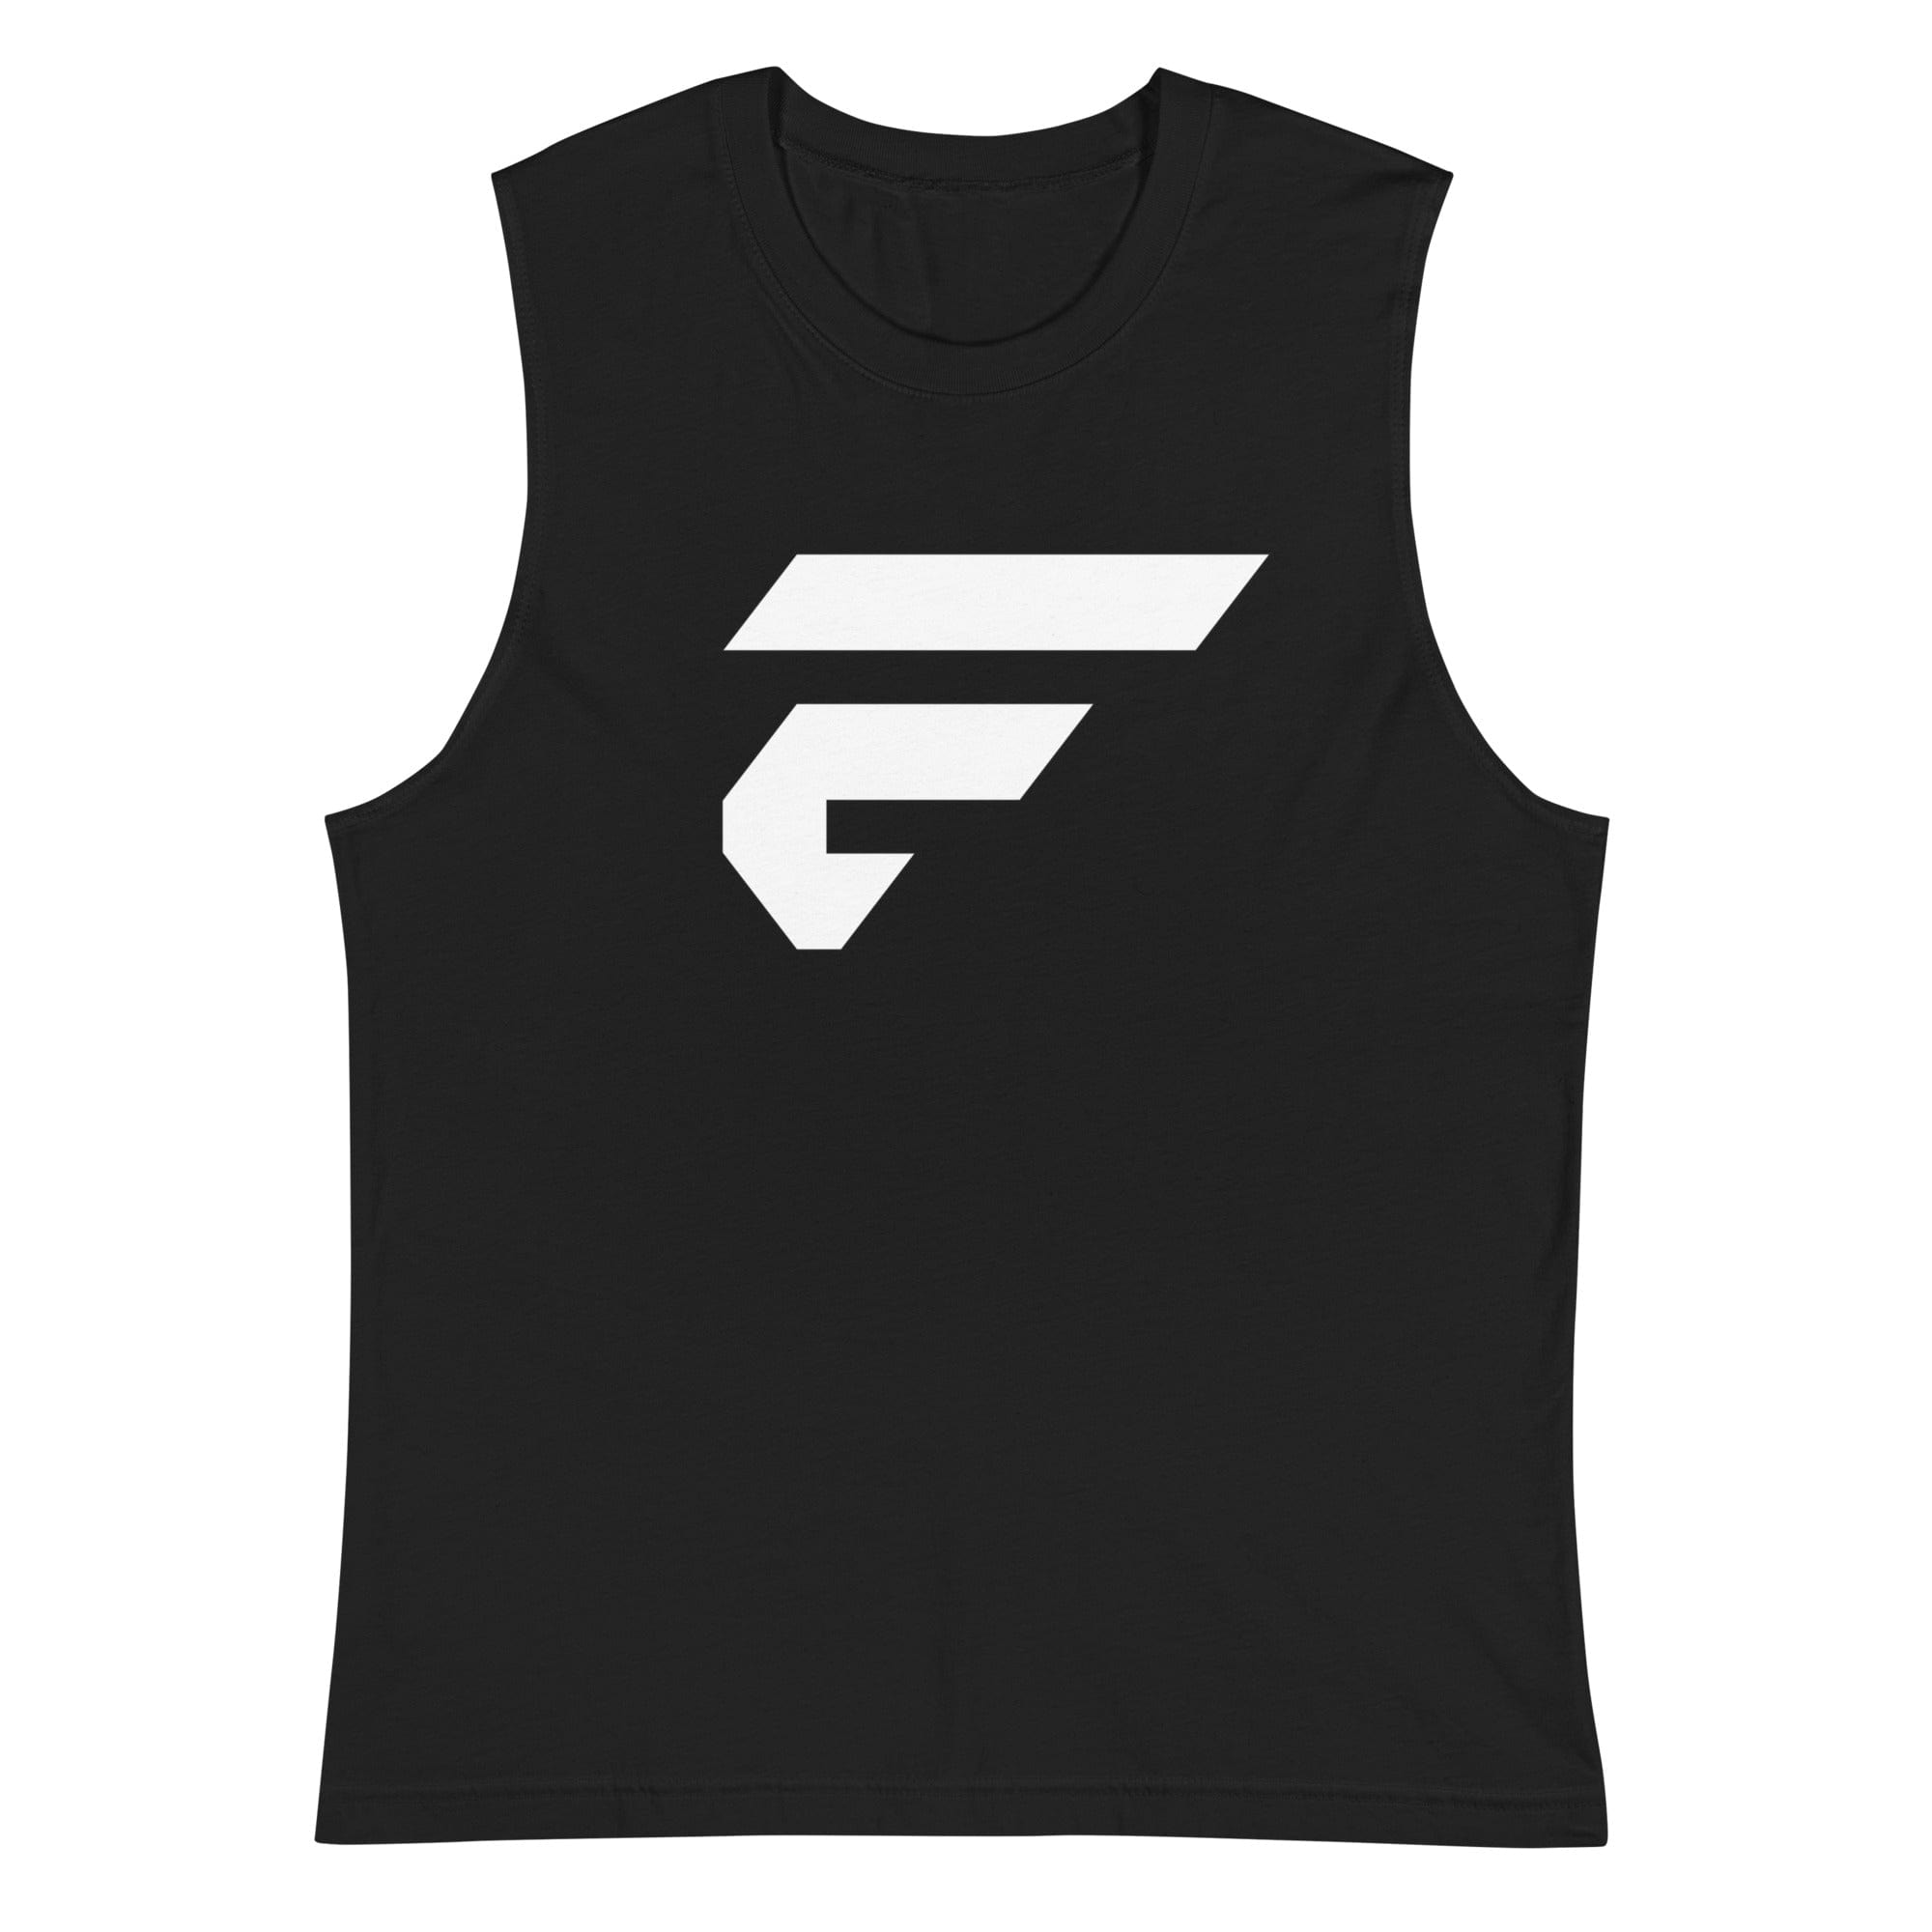 Men's black muscle shirt with Fire Cornhole F logo in white